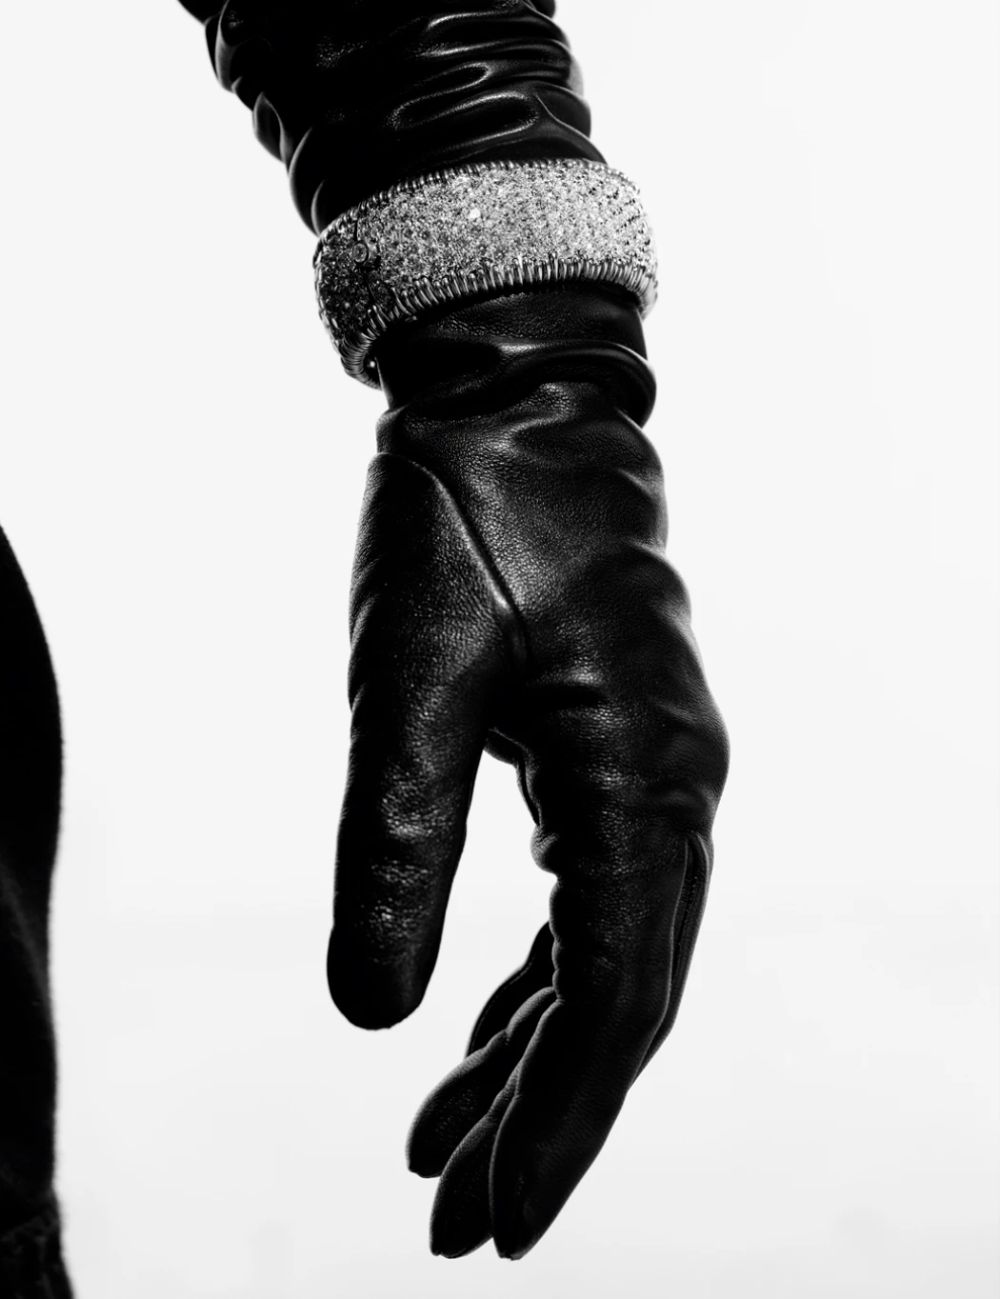 Clothing & Jewelry: Glove by Balenciaga; Bracelet by Tiffany & Co. Model: Kim Kardashian West. Photographer: Mario Sorrenti. Fashion Editor: Alastair McKimm. Hair Stylist: Chris Appleton. Makeup Artist: Mario Dedivanovic. Nail Artist: Honey